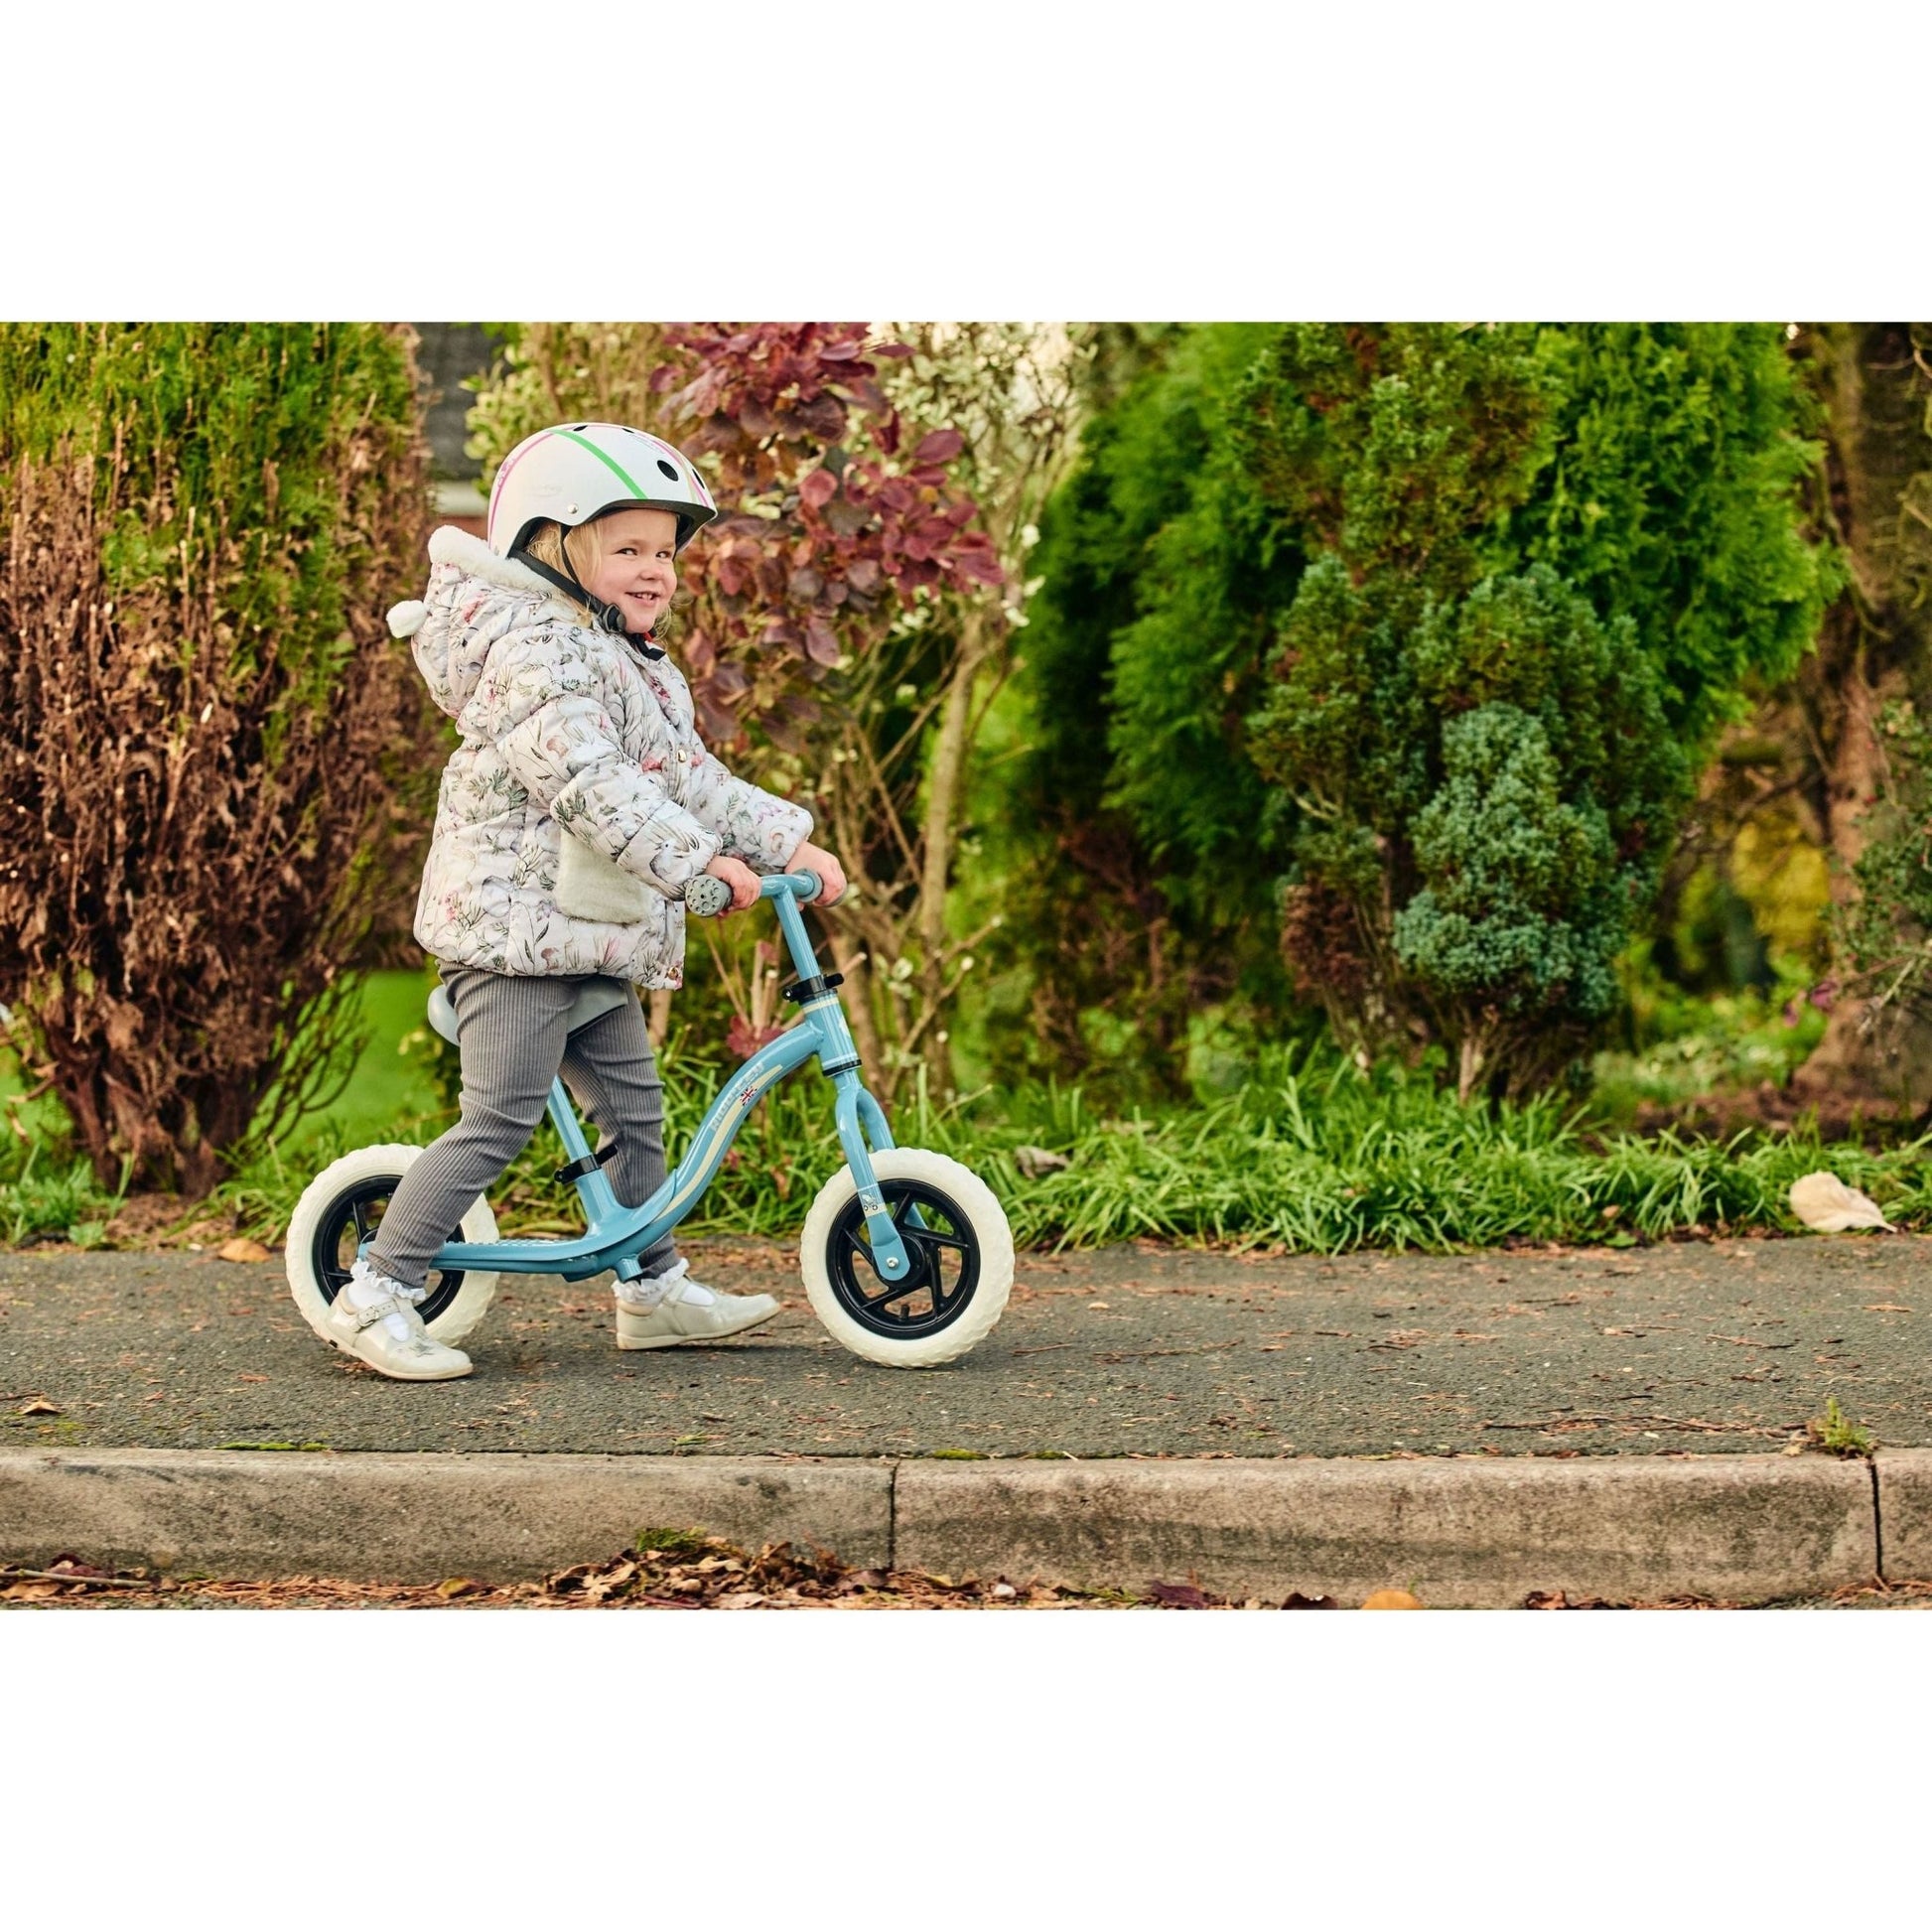 smiling girl riding Ride-Ezy Go Balance Bike - Blue & Silver